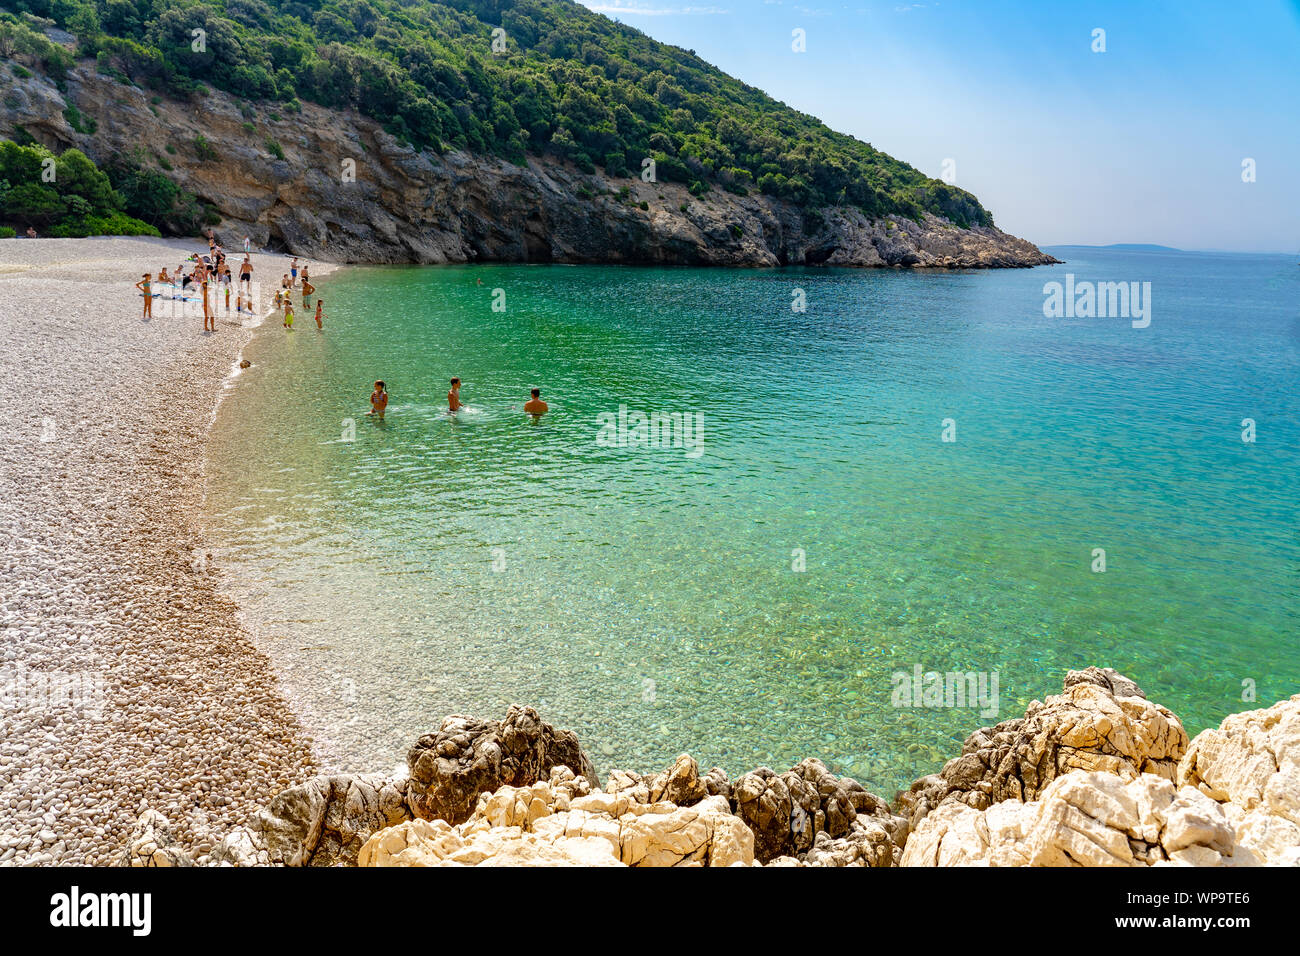 09.04.2019. Mali Losinj, Kroatien: lubenice Strand mit Tousist in Insel Cres Kroatien mit kristallklarem, türkisfarbenem Wasser Stockfoto